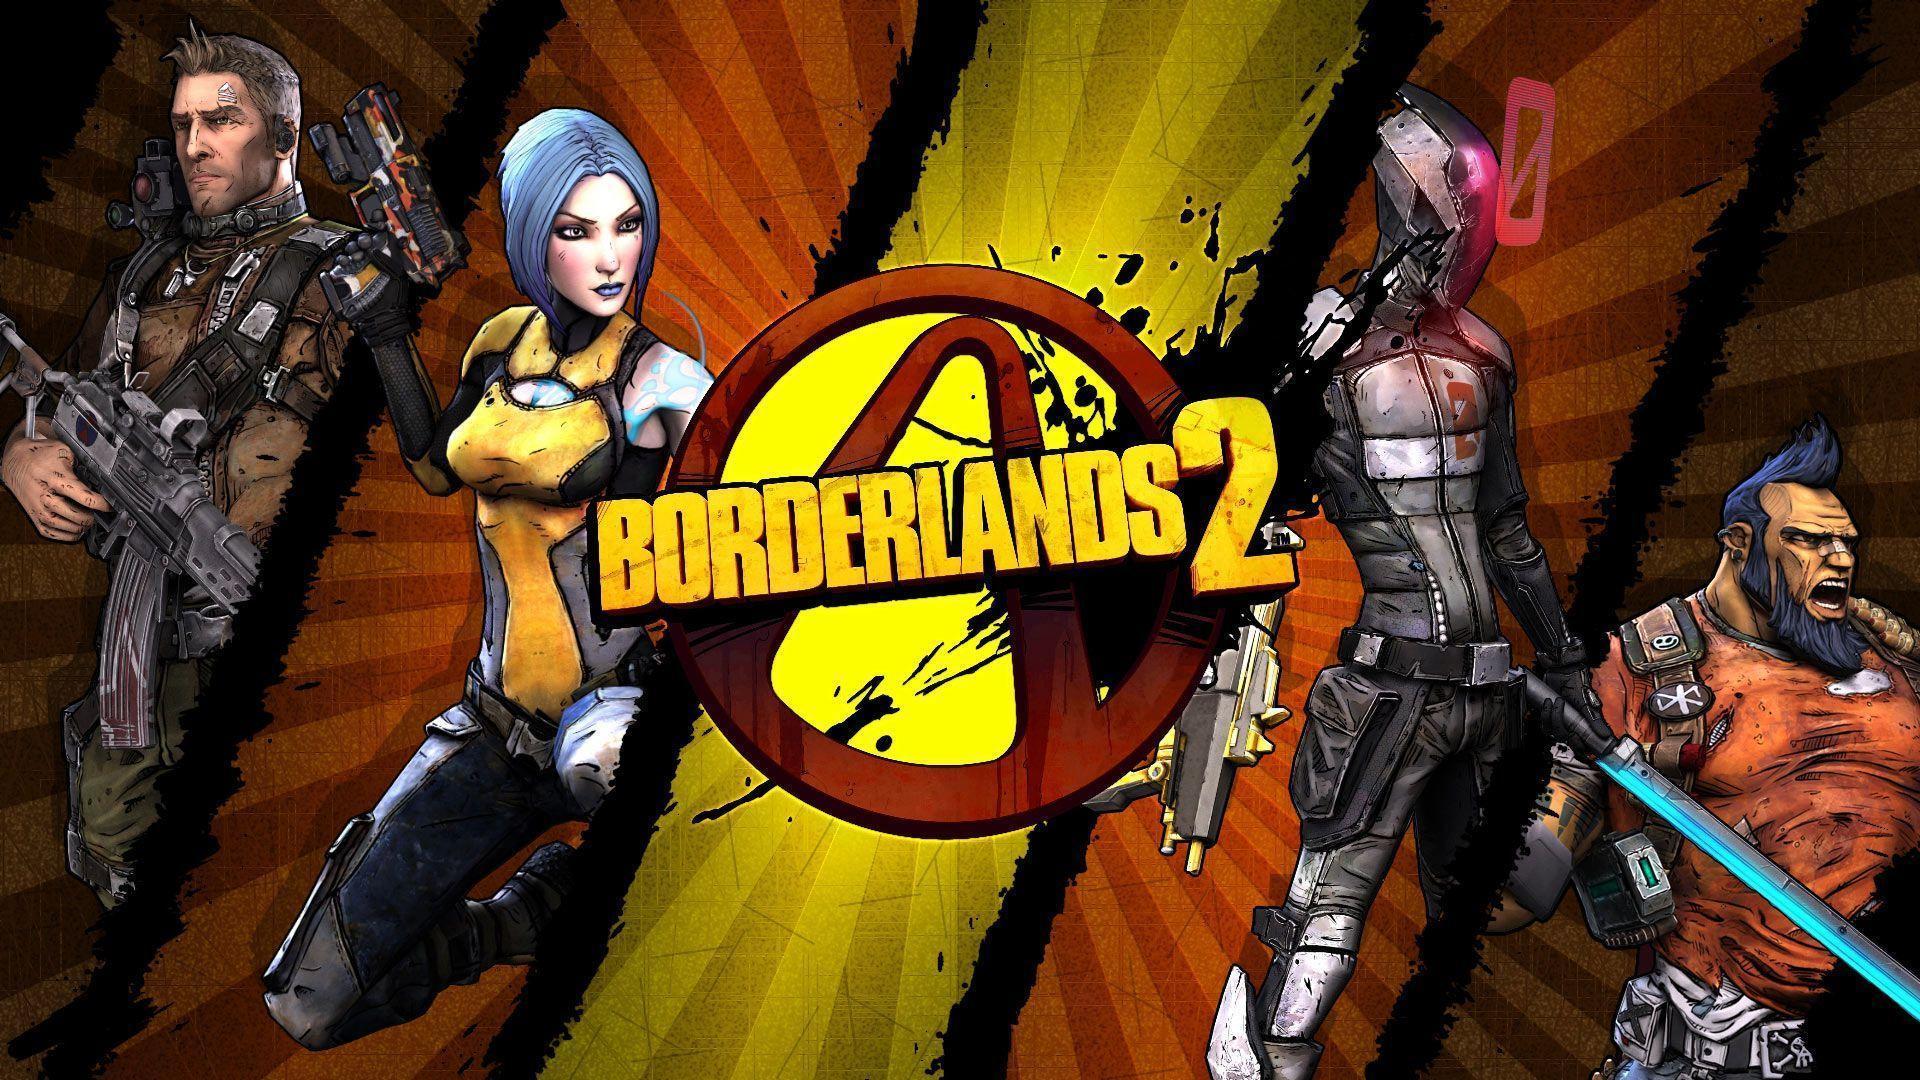 Borderlands 2 Game Wallpaper